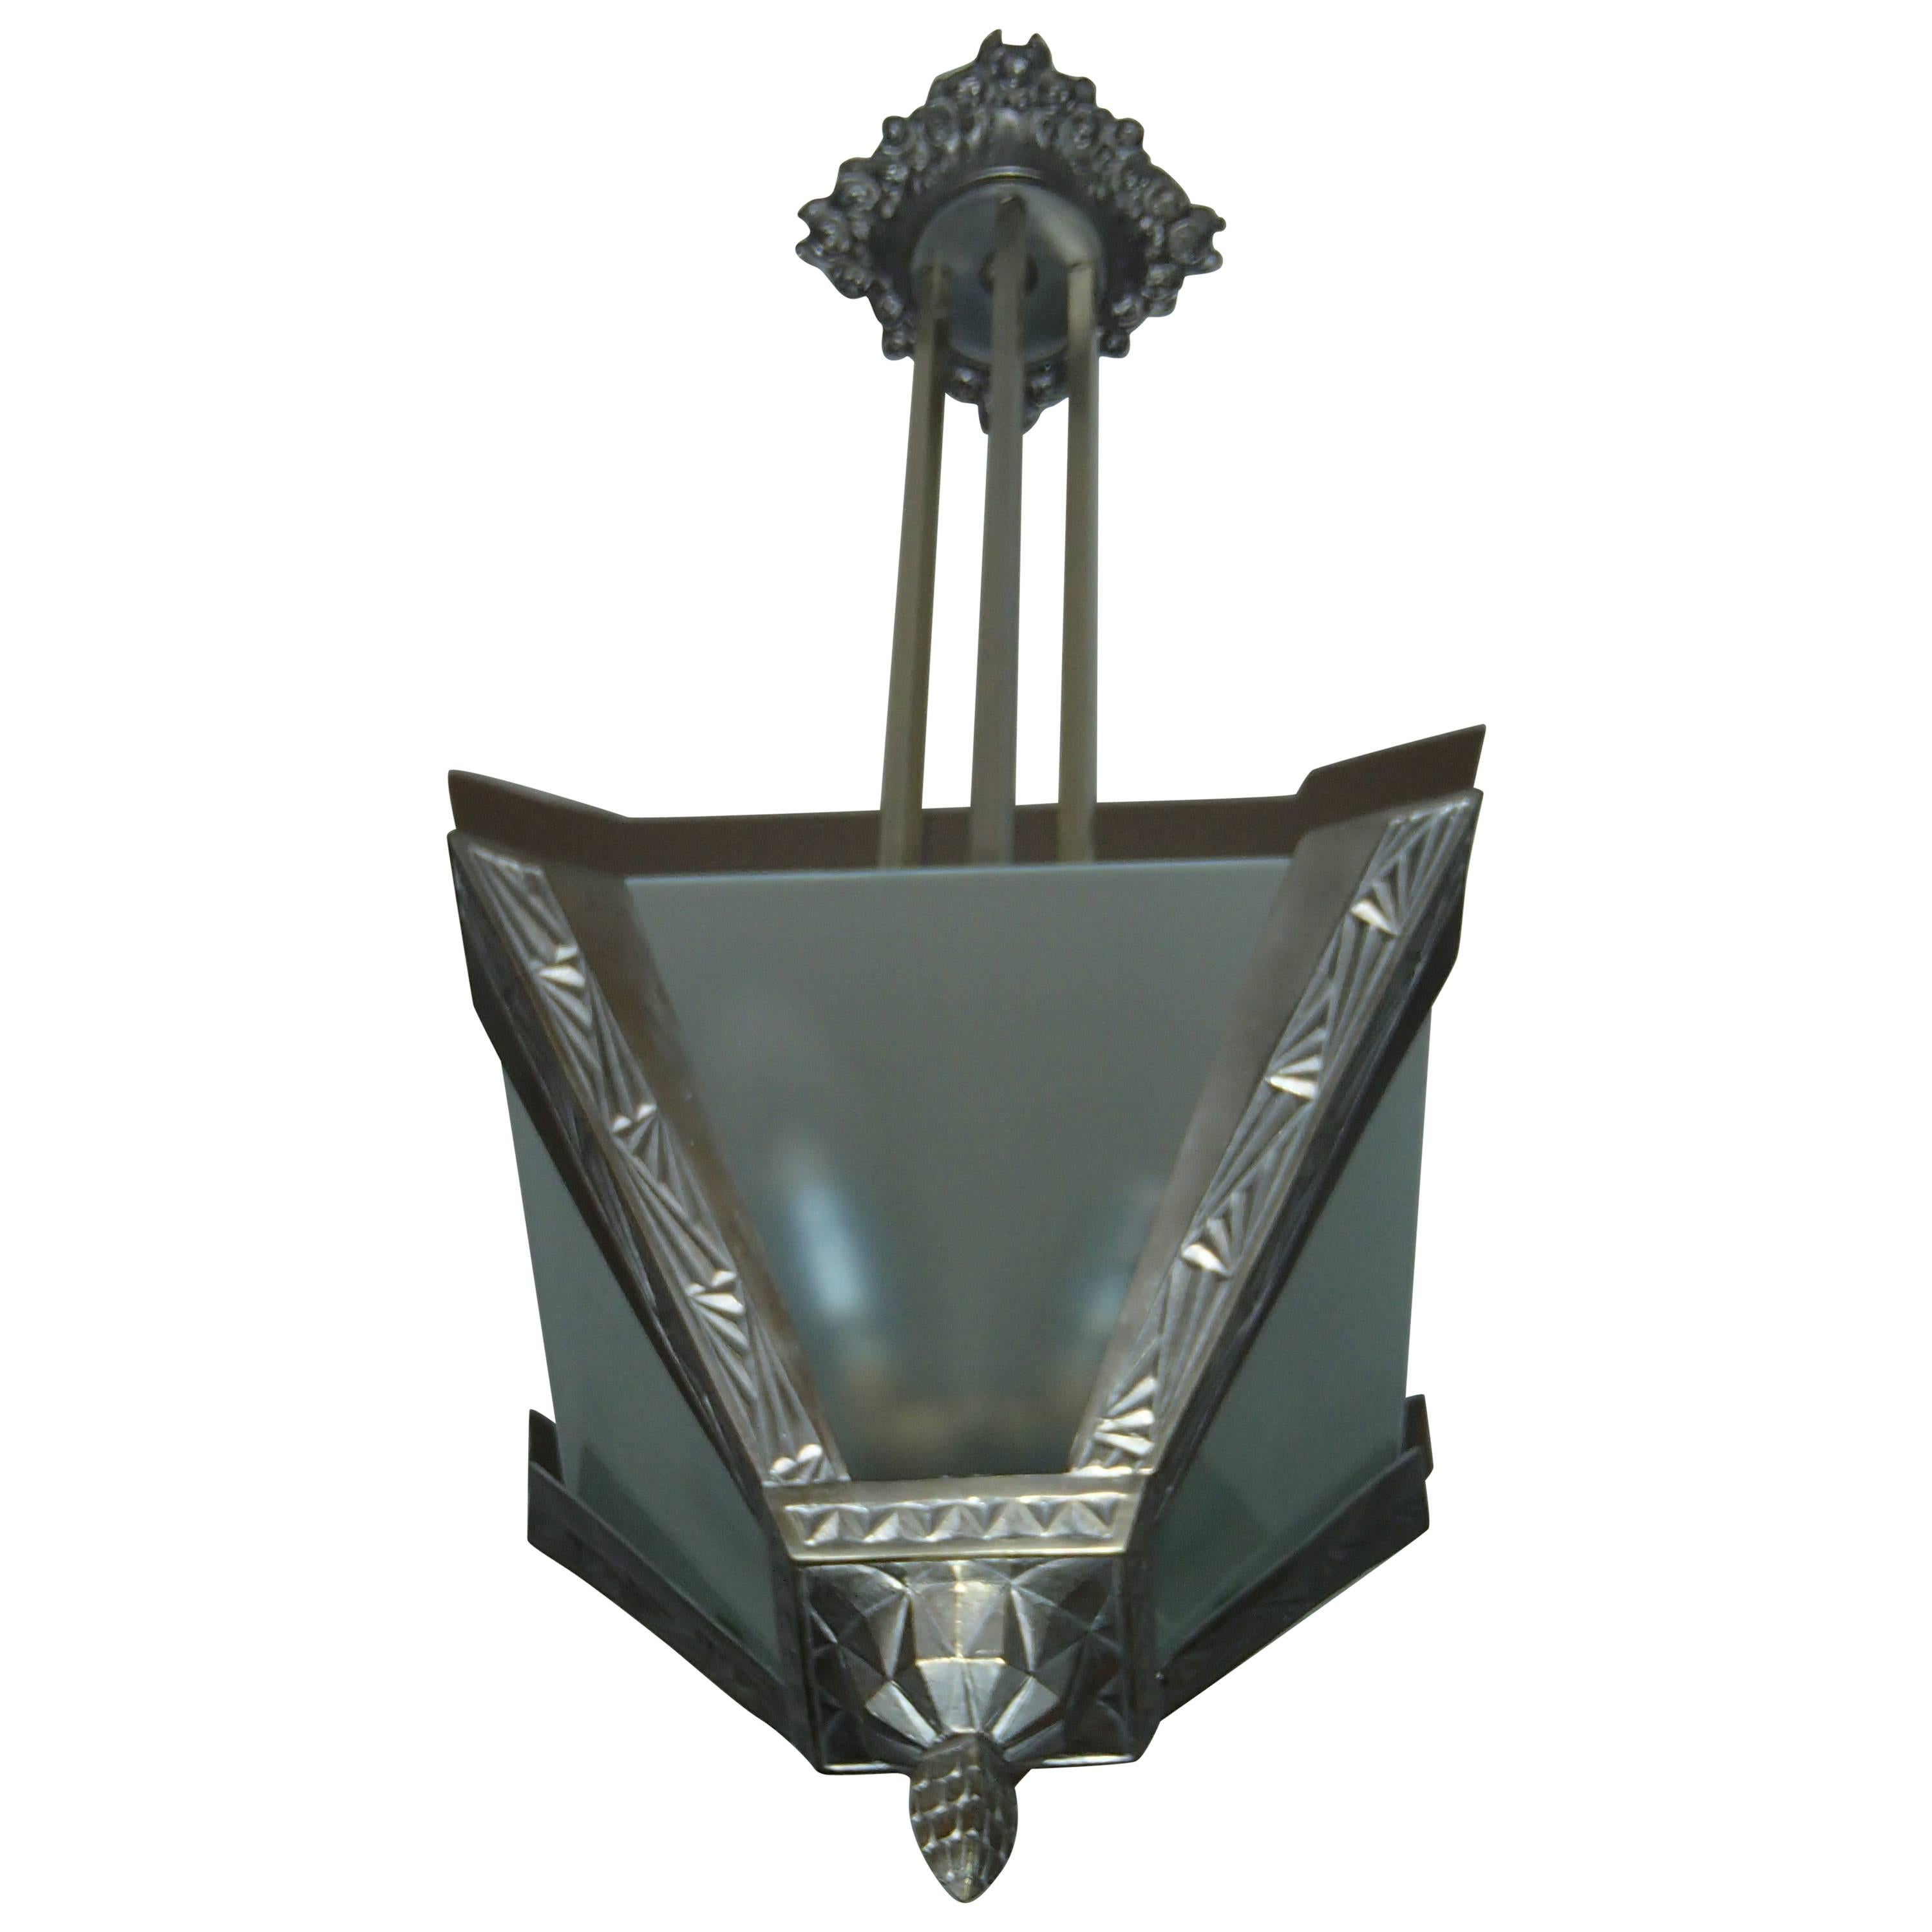 Art Deco geometric  bronze nickeled chandelier with satined glass